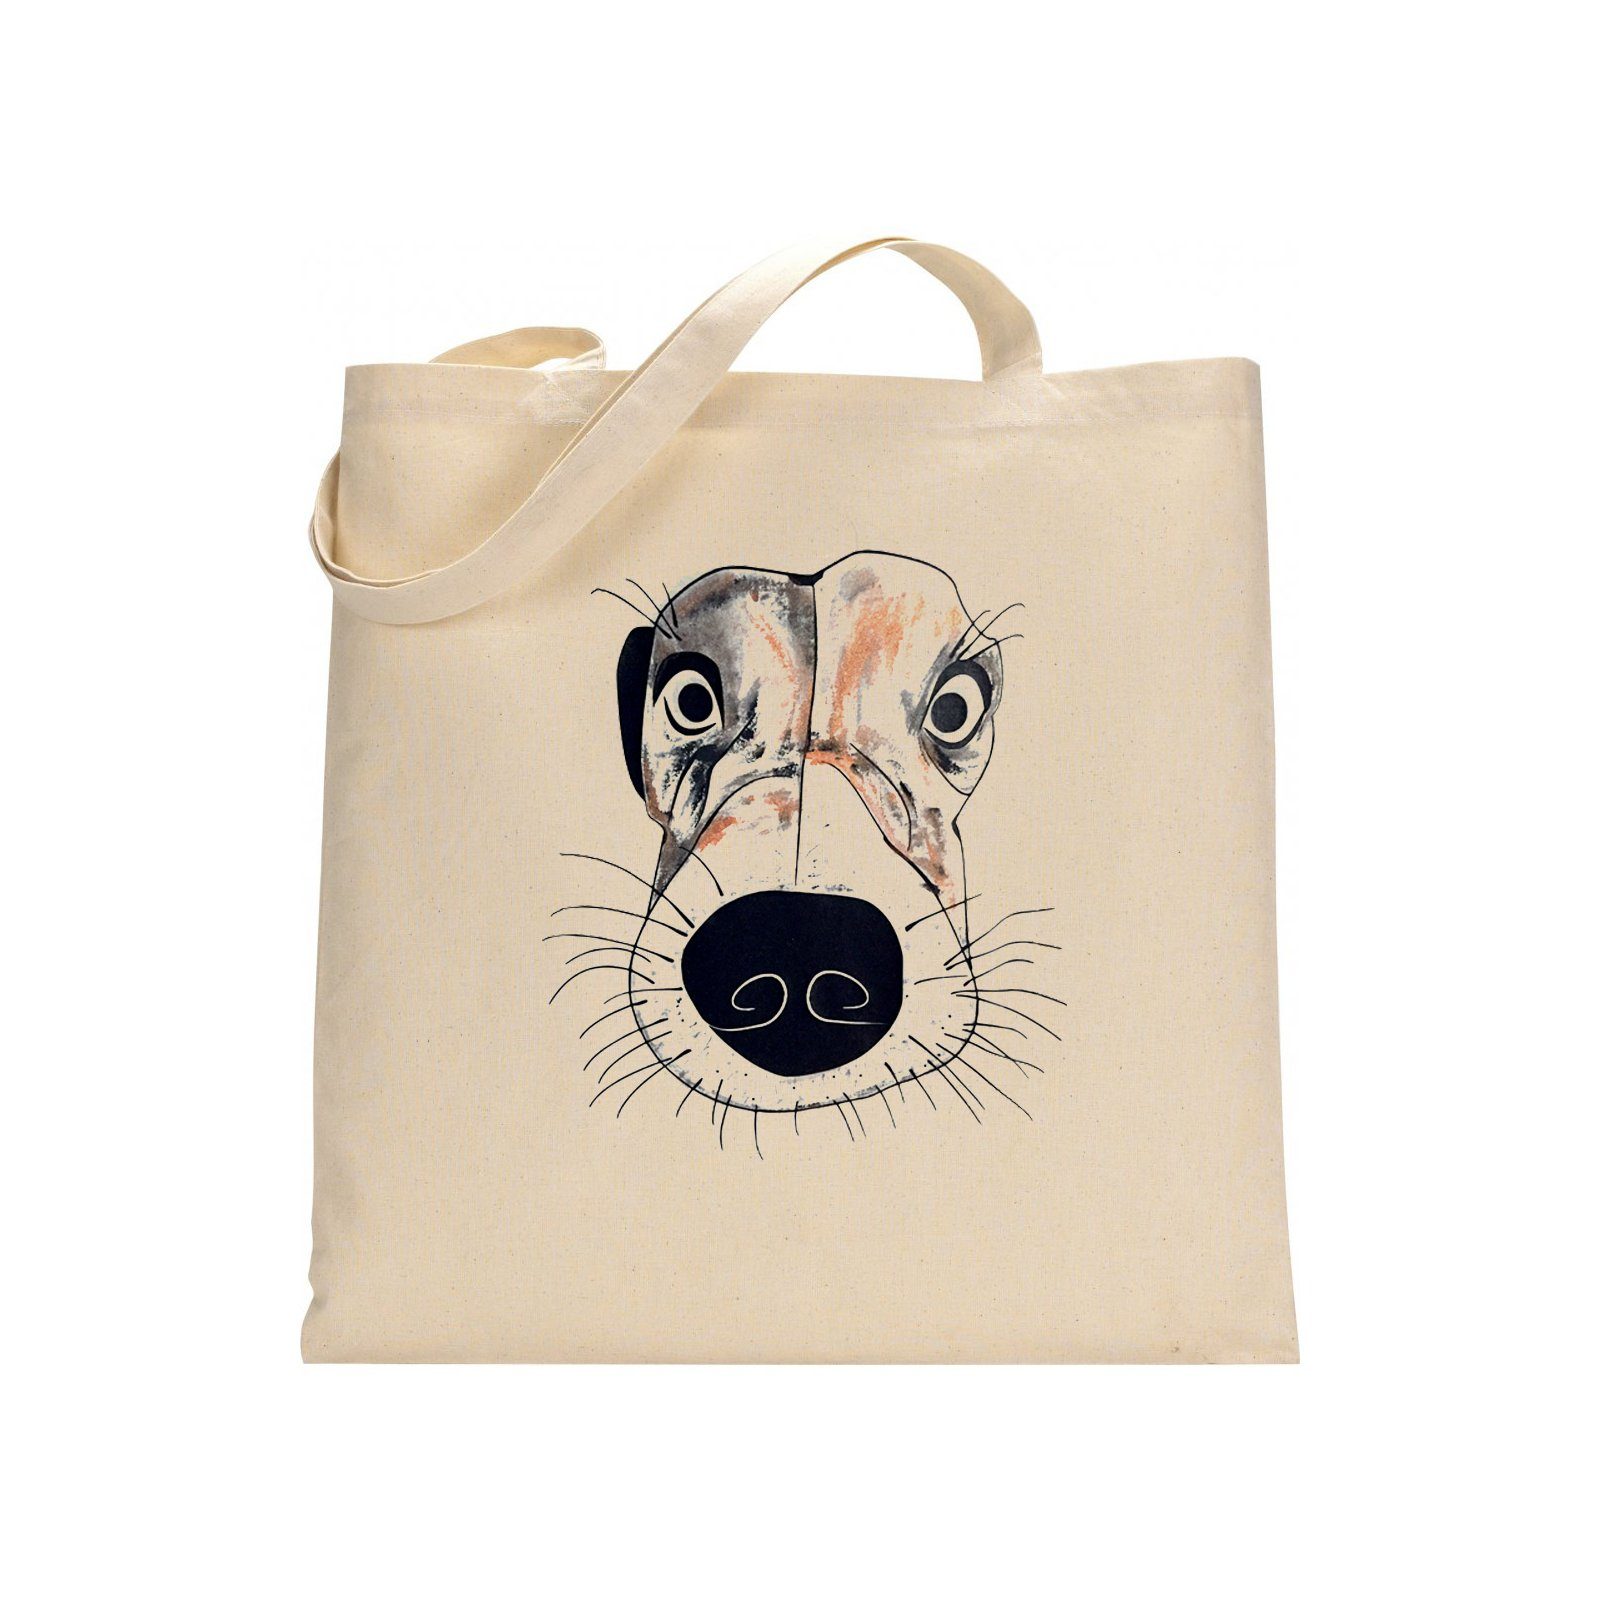 Bags - Oli The Dog Tote Bag